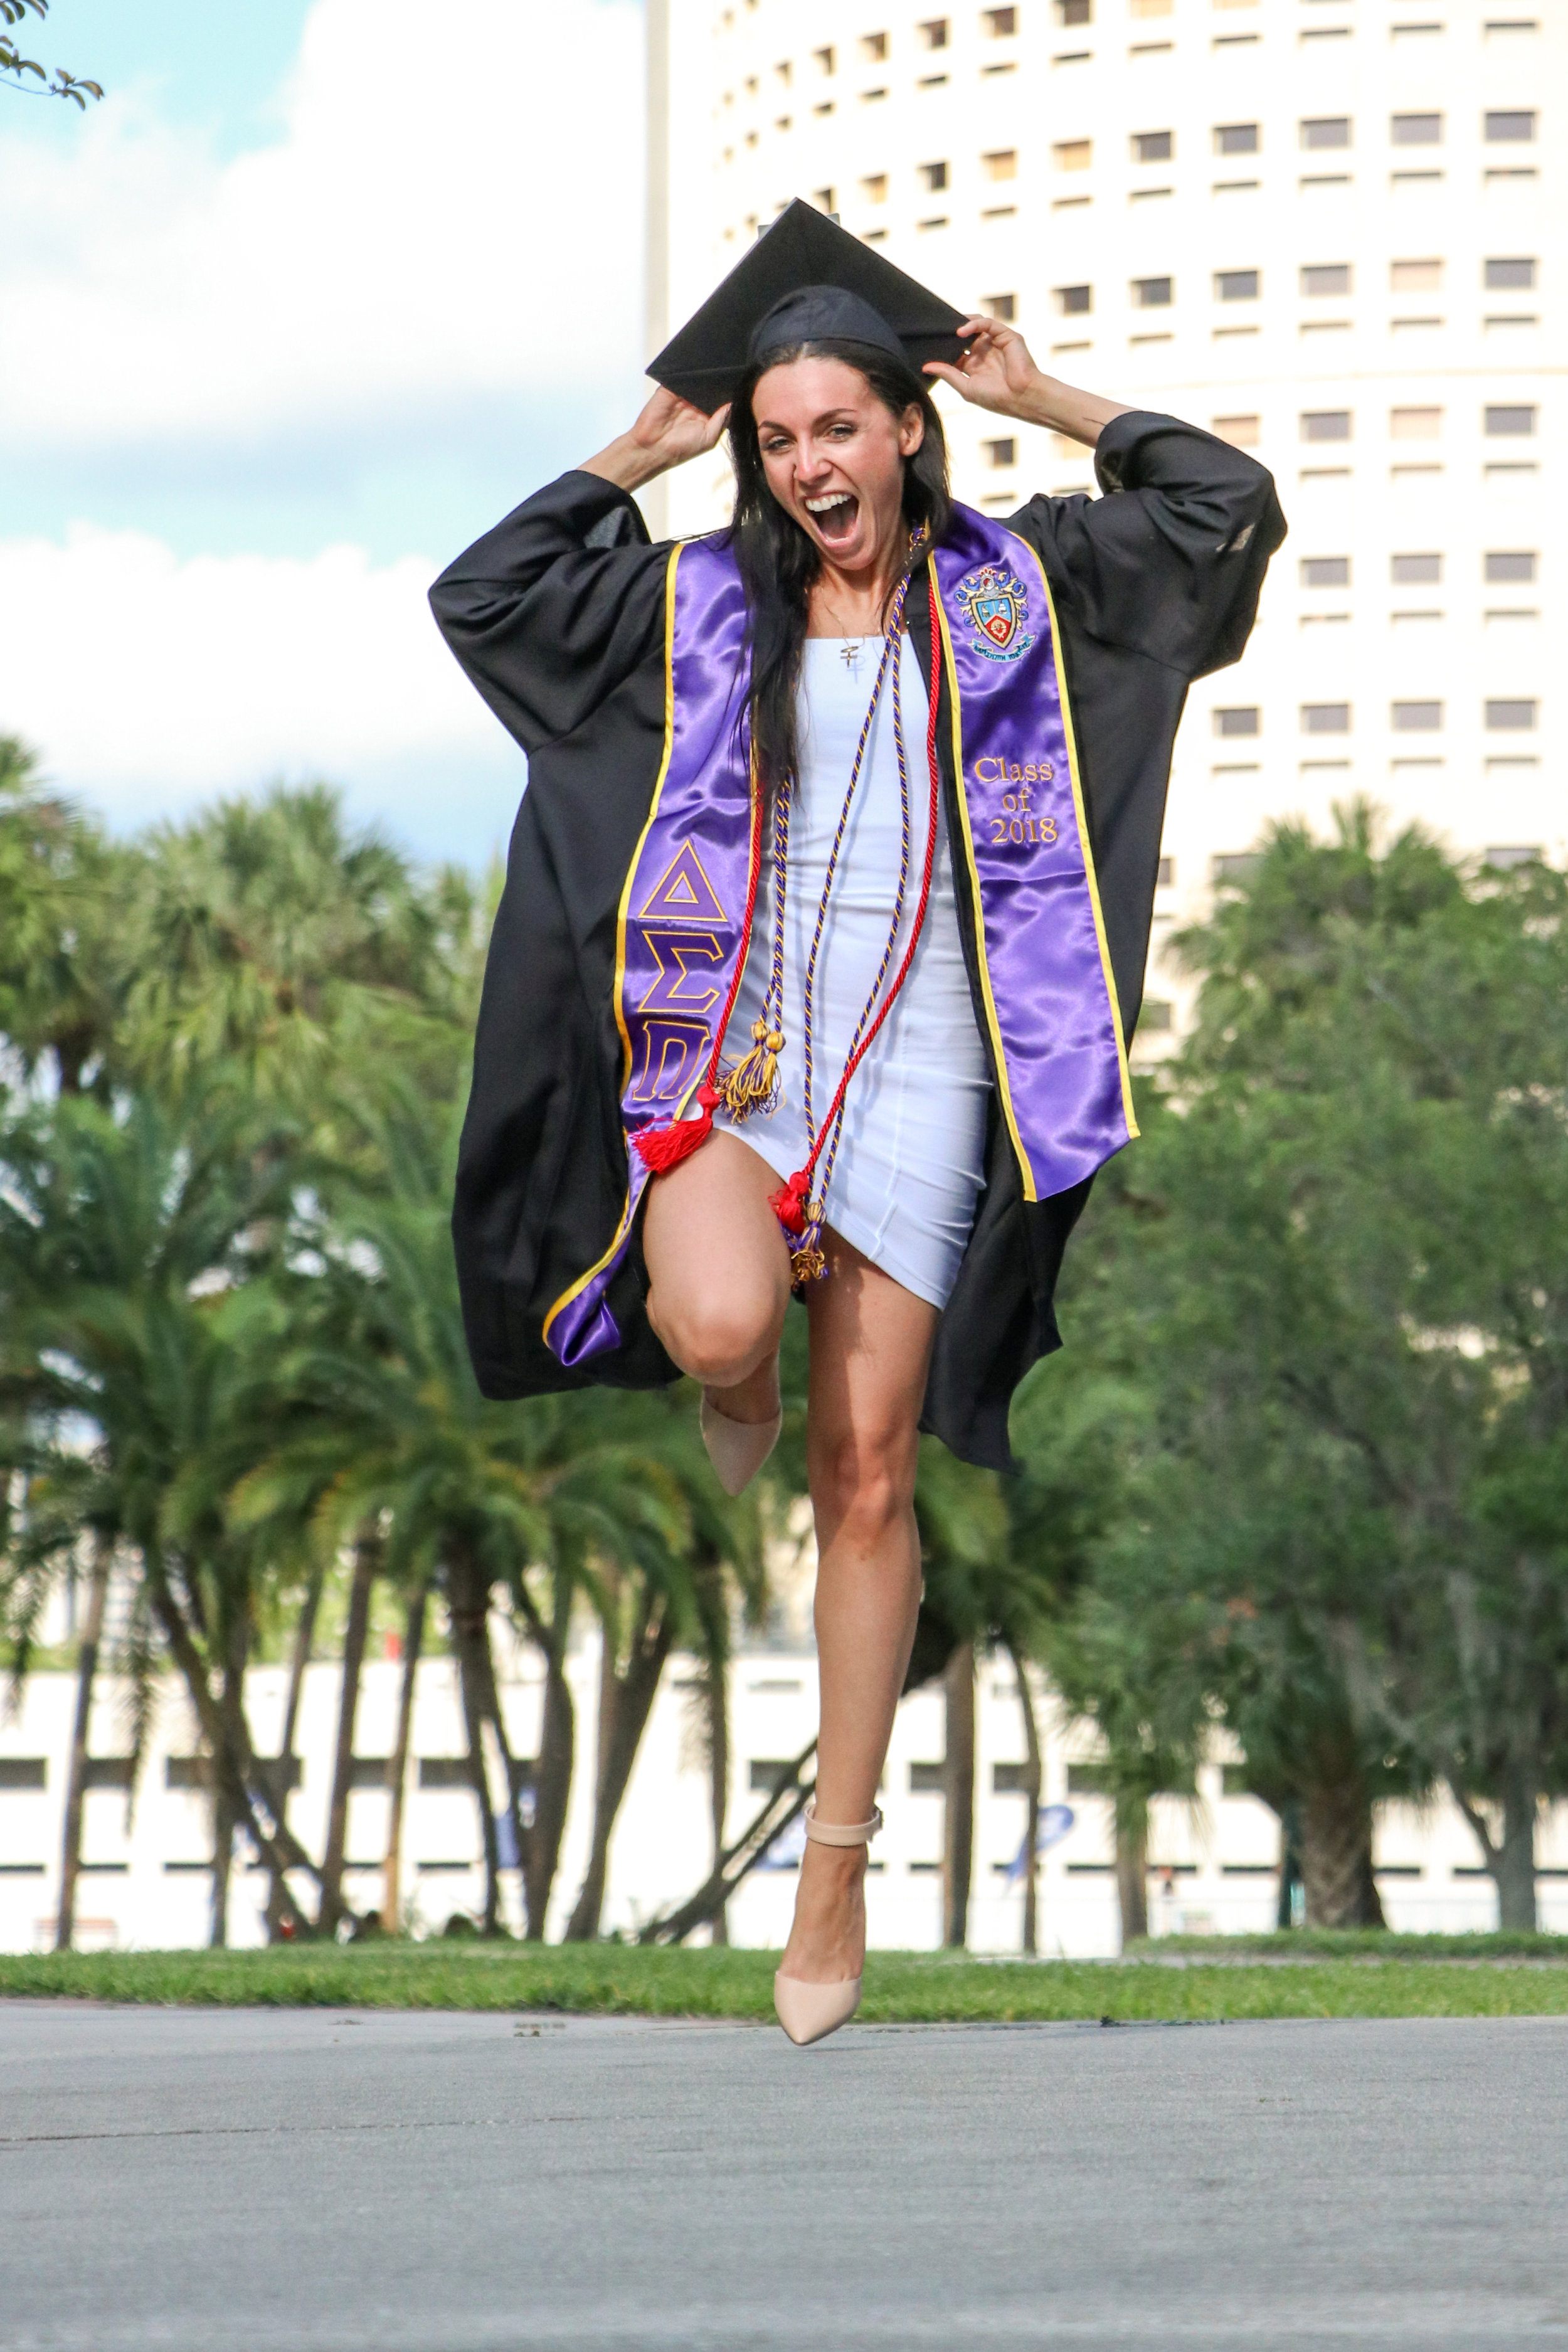 High-Kick-Photography-Unversity-Tampa-Florida-Graduation-Portraits-Senior-Funny-LR-1.jpg